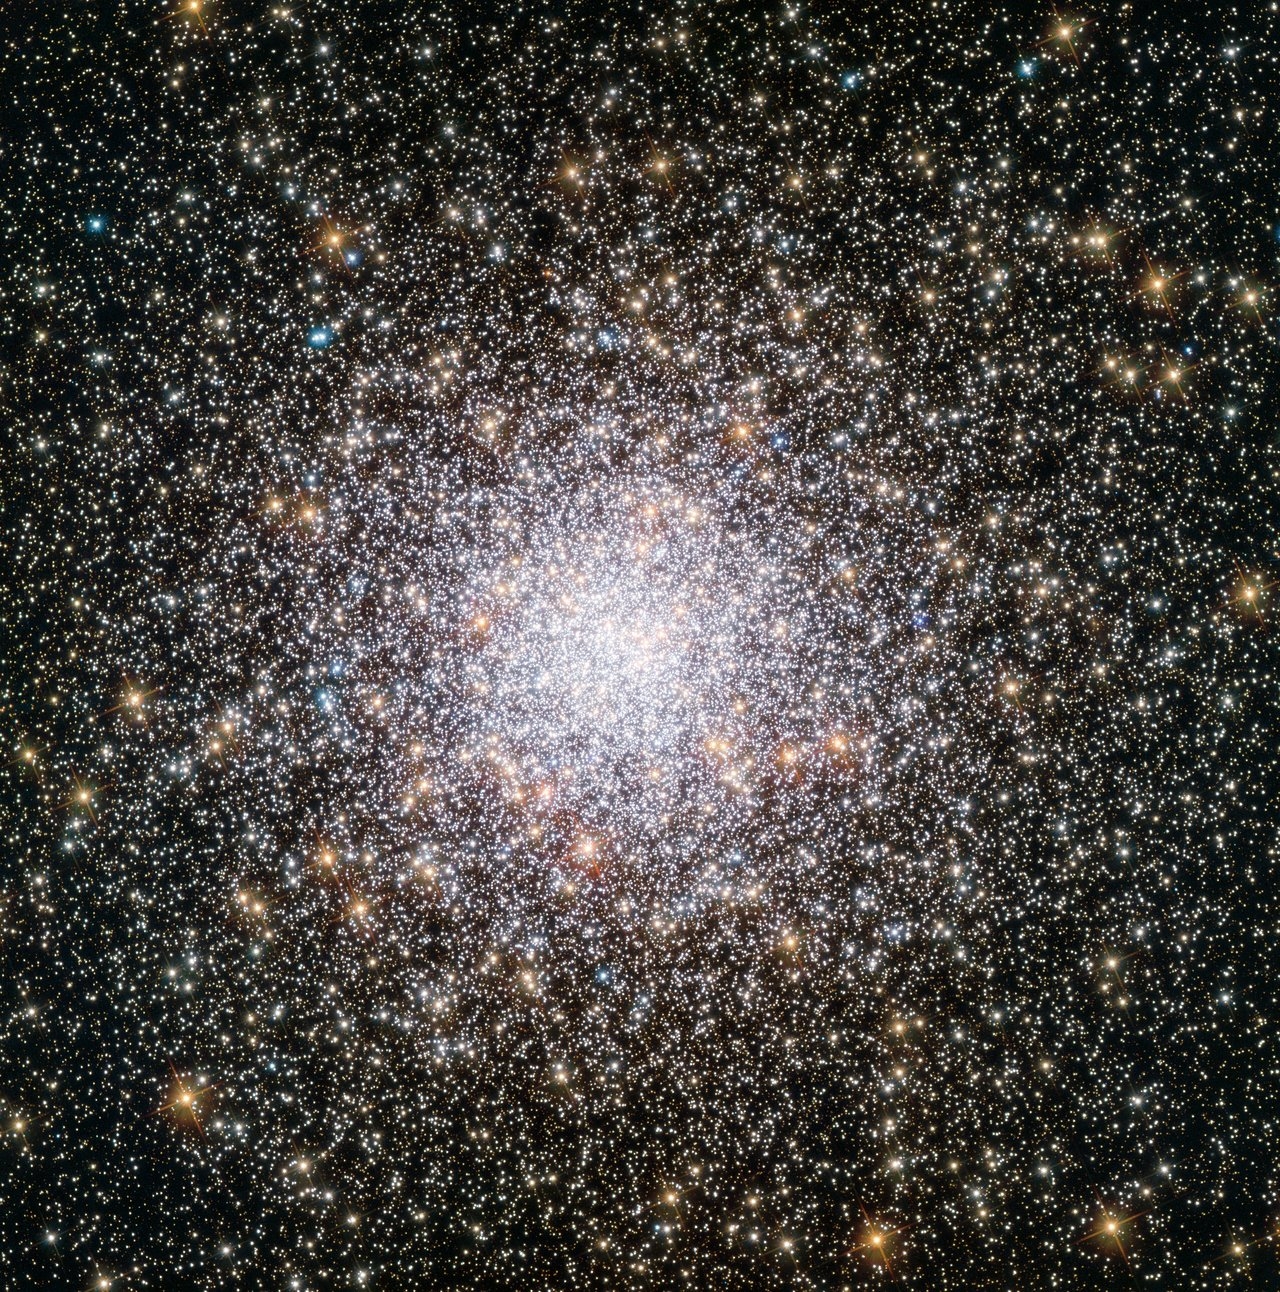 TweakTown Enlarged Image - Hubble Space Telescope image of a globular cluster